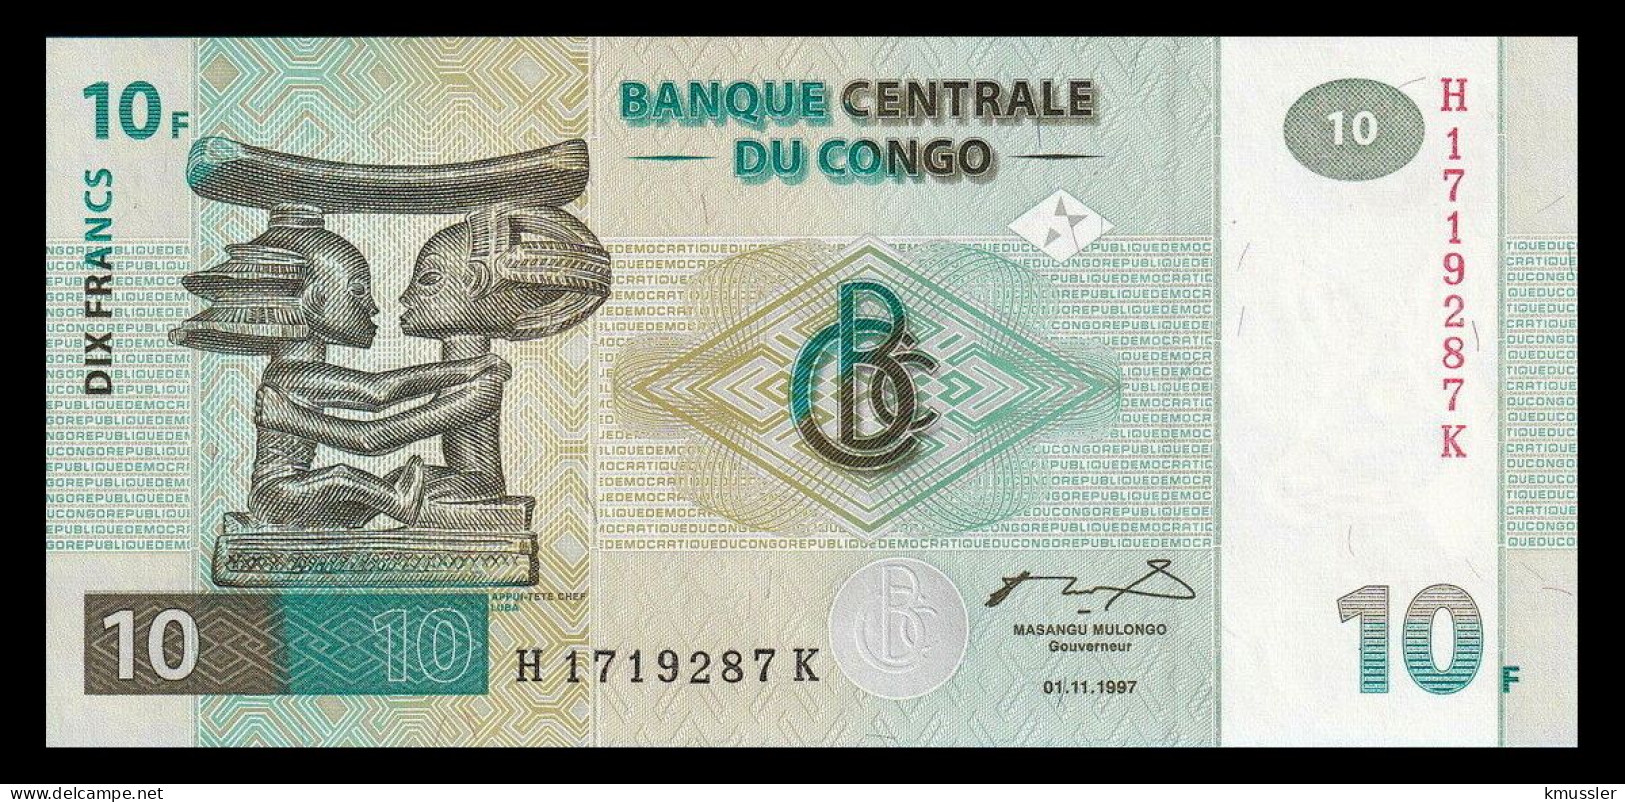 # # # Banknote Kongo (Congo) 10 Francs 1997 (P-87B) 1997 HdM UNC # # # - Democratic Republic Of The Congo & Zaire